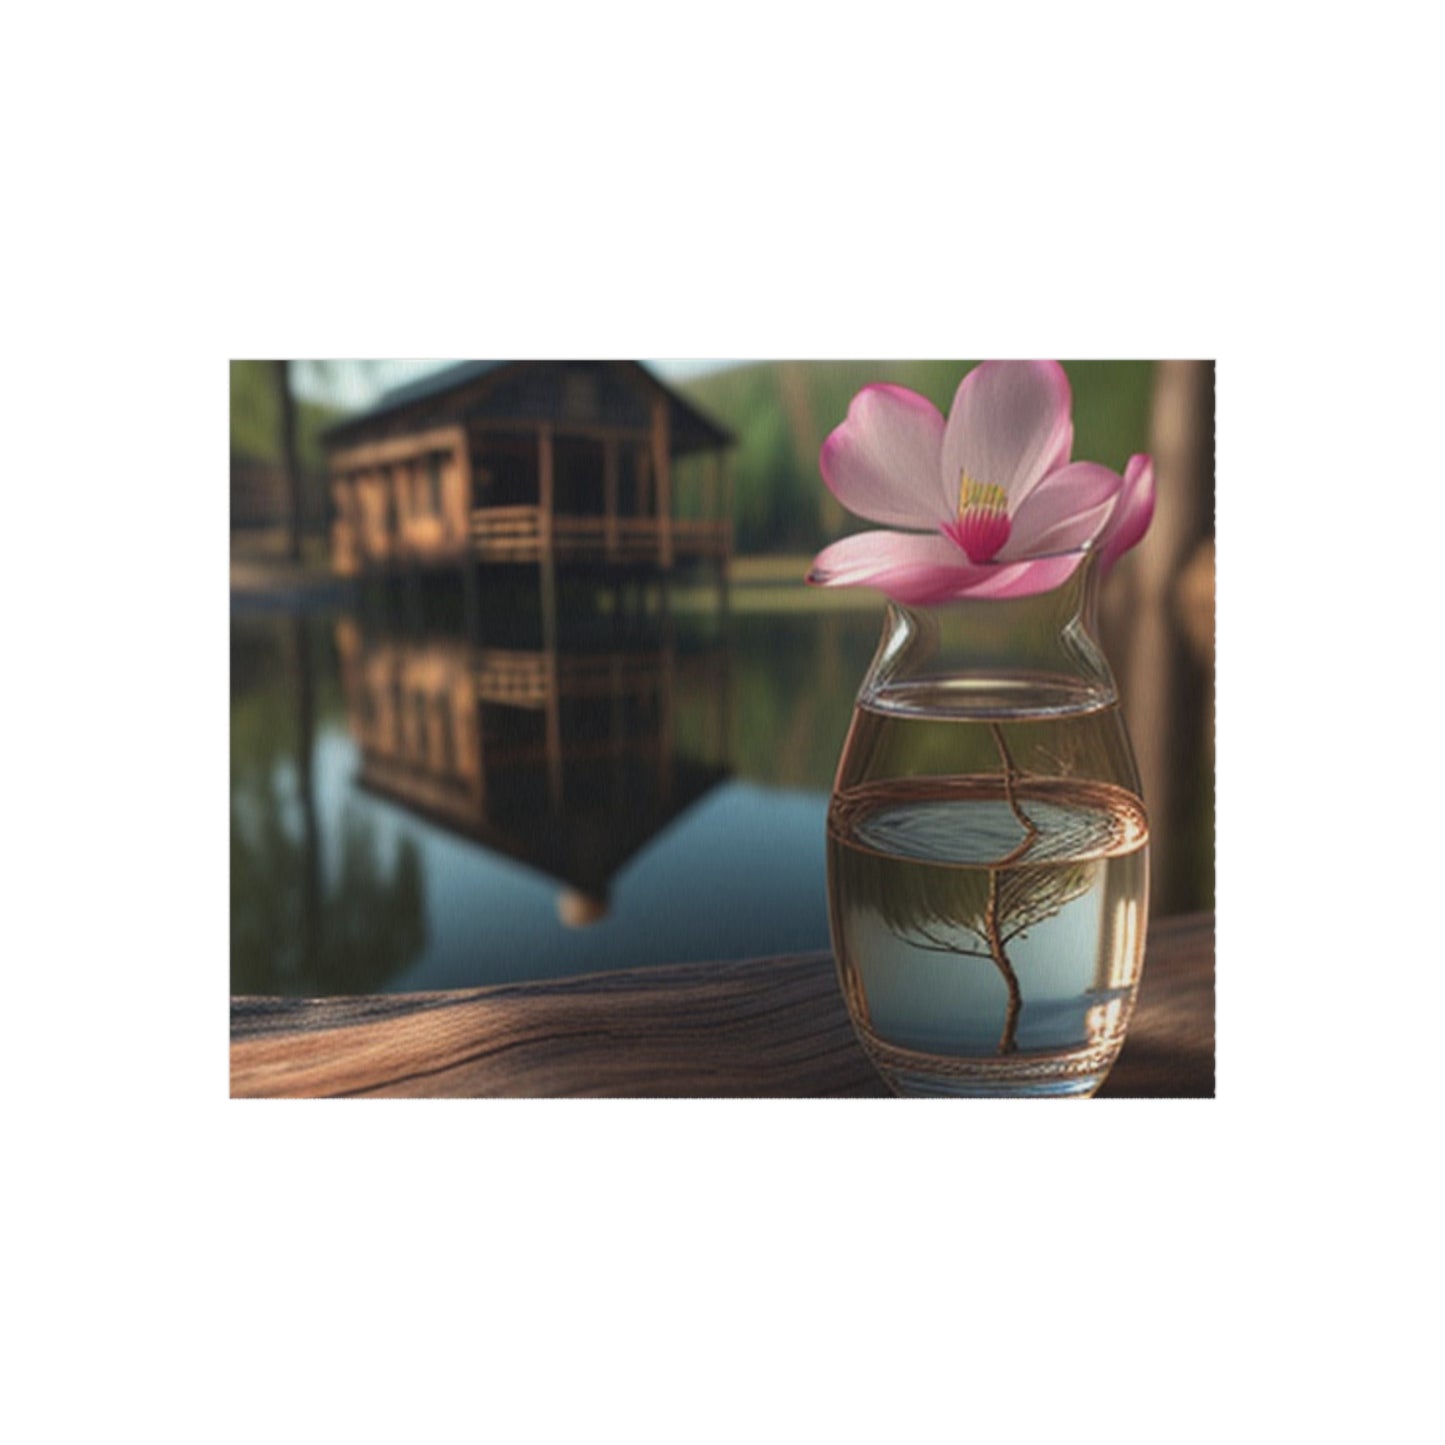 Outdoor Rug  Magnolia in a Glass vase 1